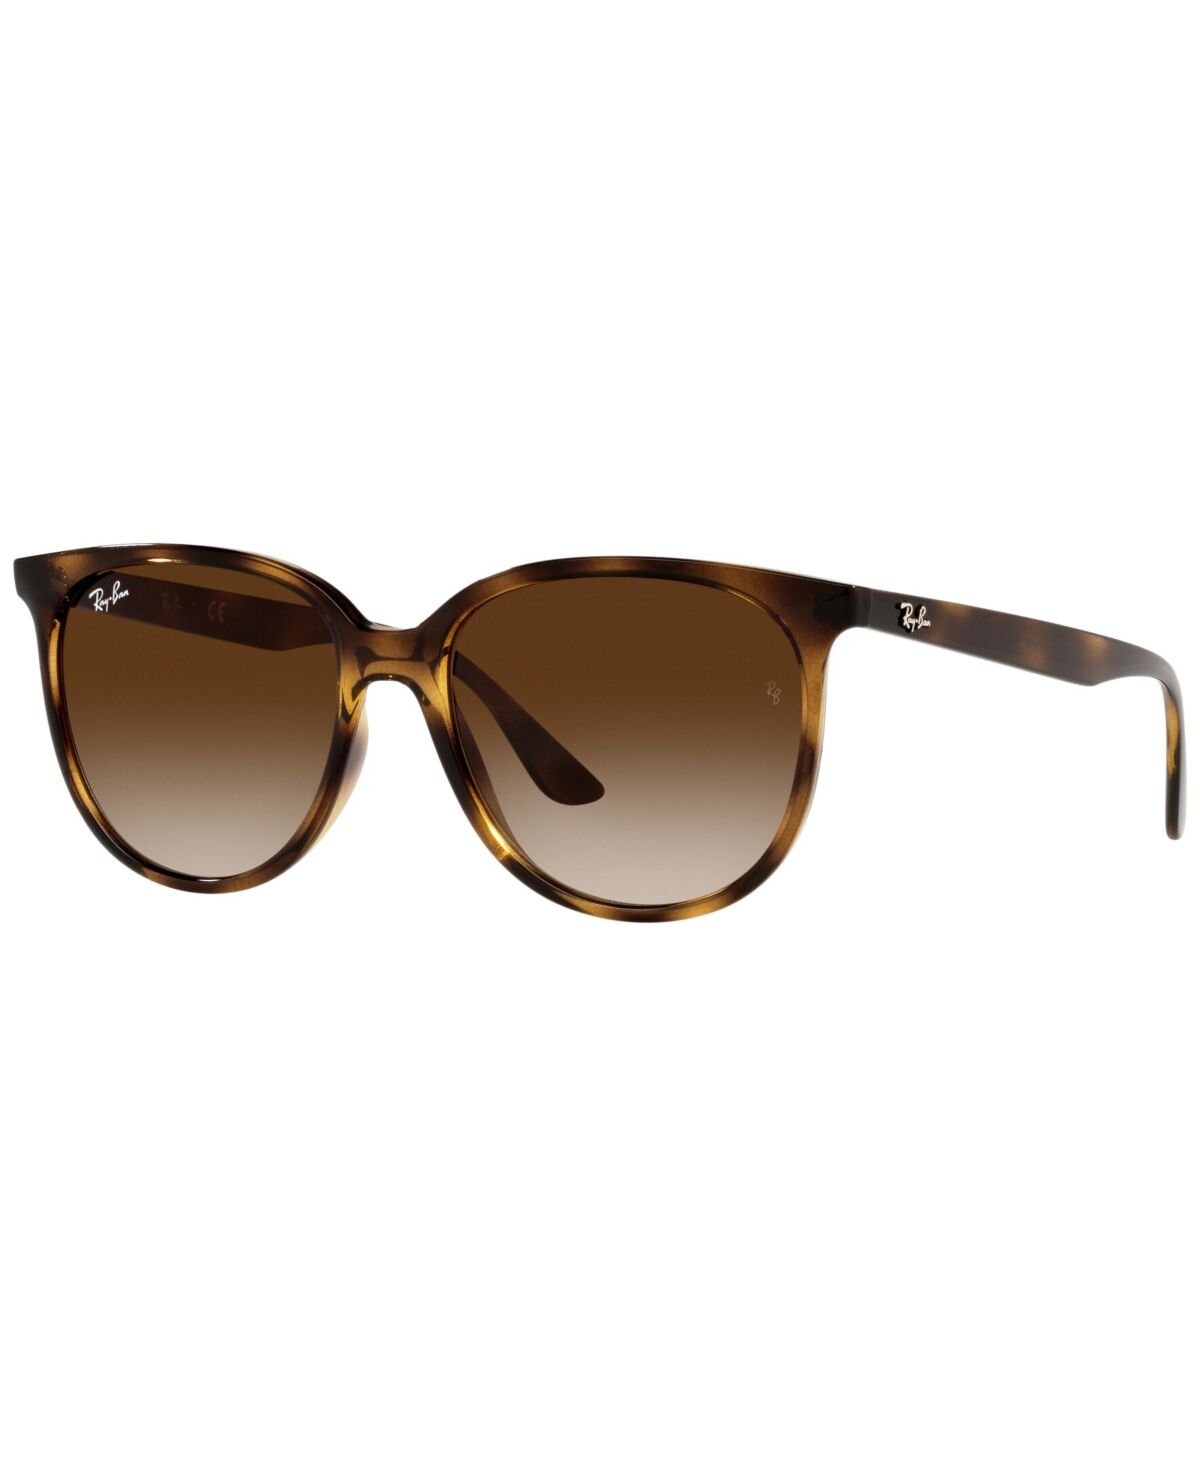 Ray-Ban Women's Sunglasses, RB4378 - Havana